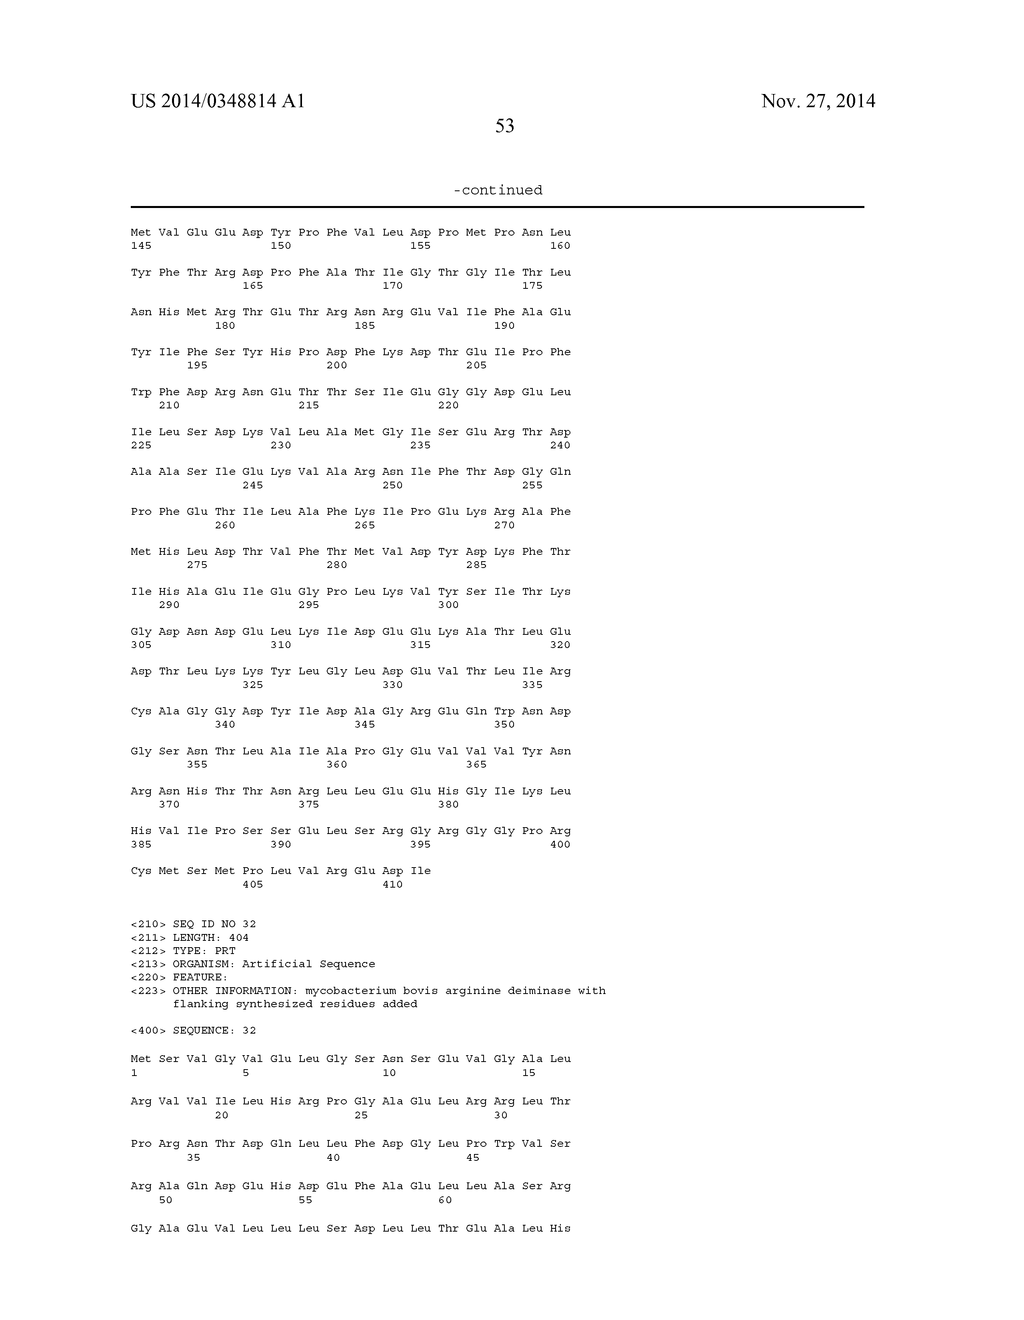 ARGINNE DEIMINASE WITH REDUCED CROSS-REACTIVITY TOWARD ADI - PEG 20     ANTIBODIES FOR CANCER TREATMENT - diagram, schematic, and image 54